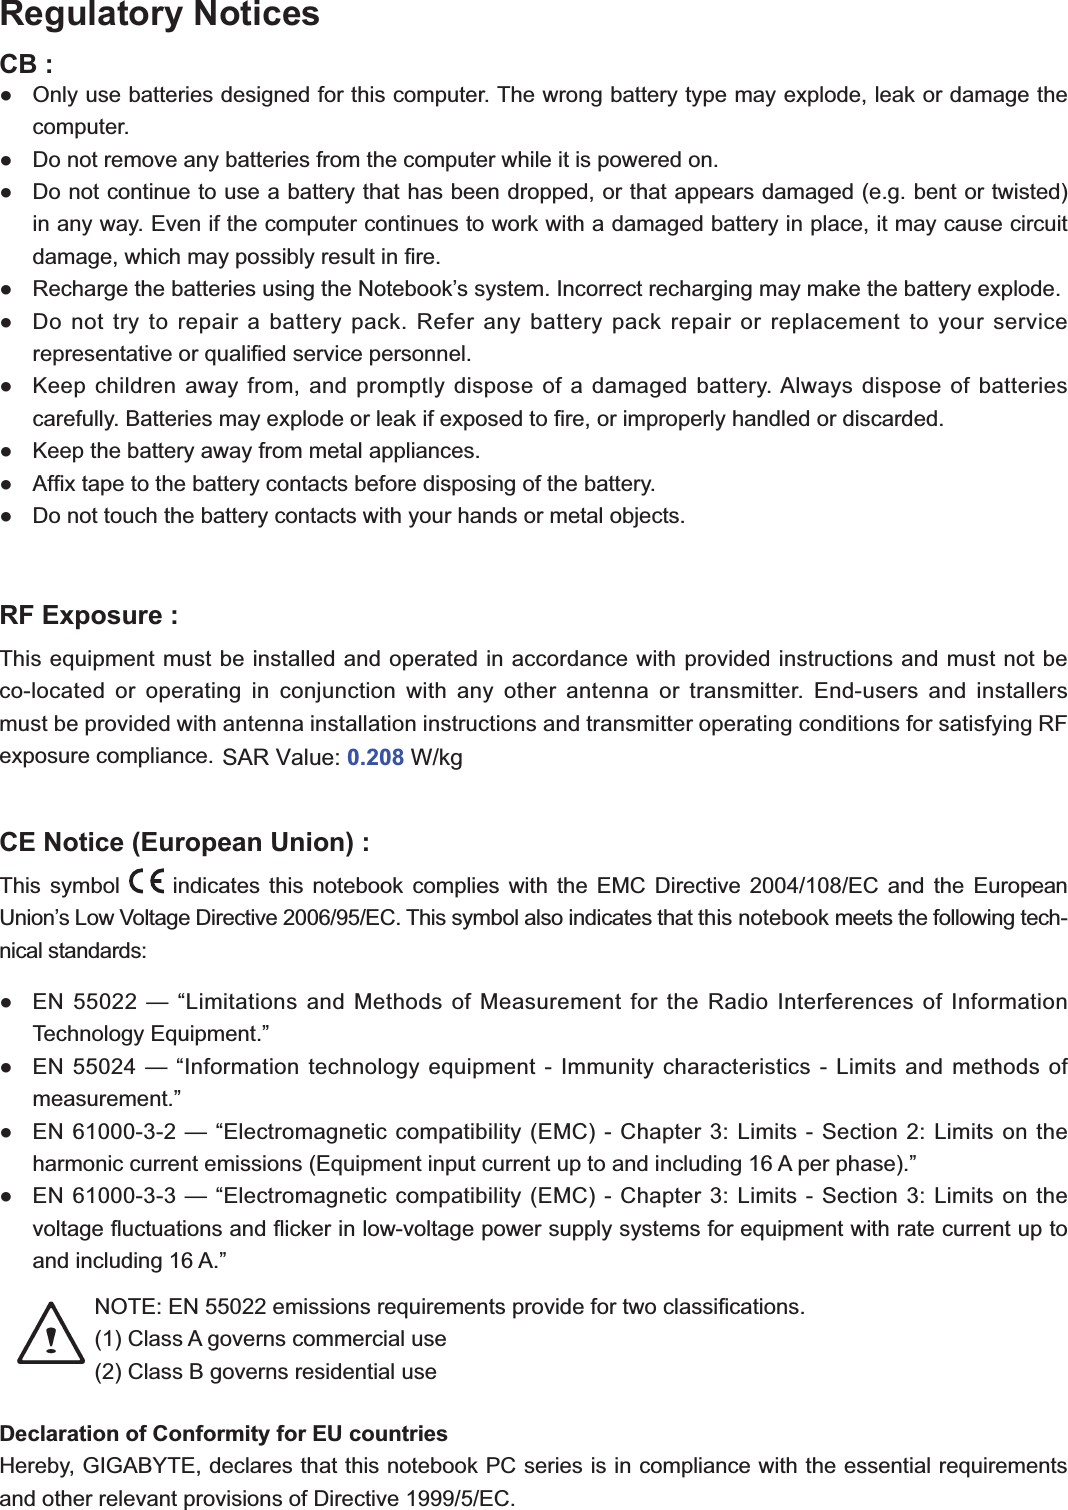 Regulatory NoticesCB :         RF Exposure :             CE Notice (European Union) :                   Declaration of Conformity for EU countriesSAR Value: 0.208 W/kg